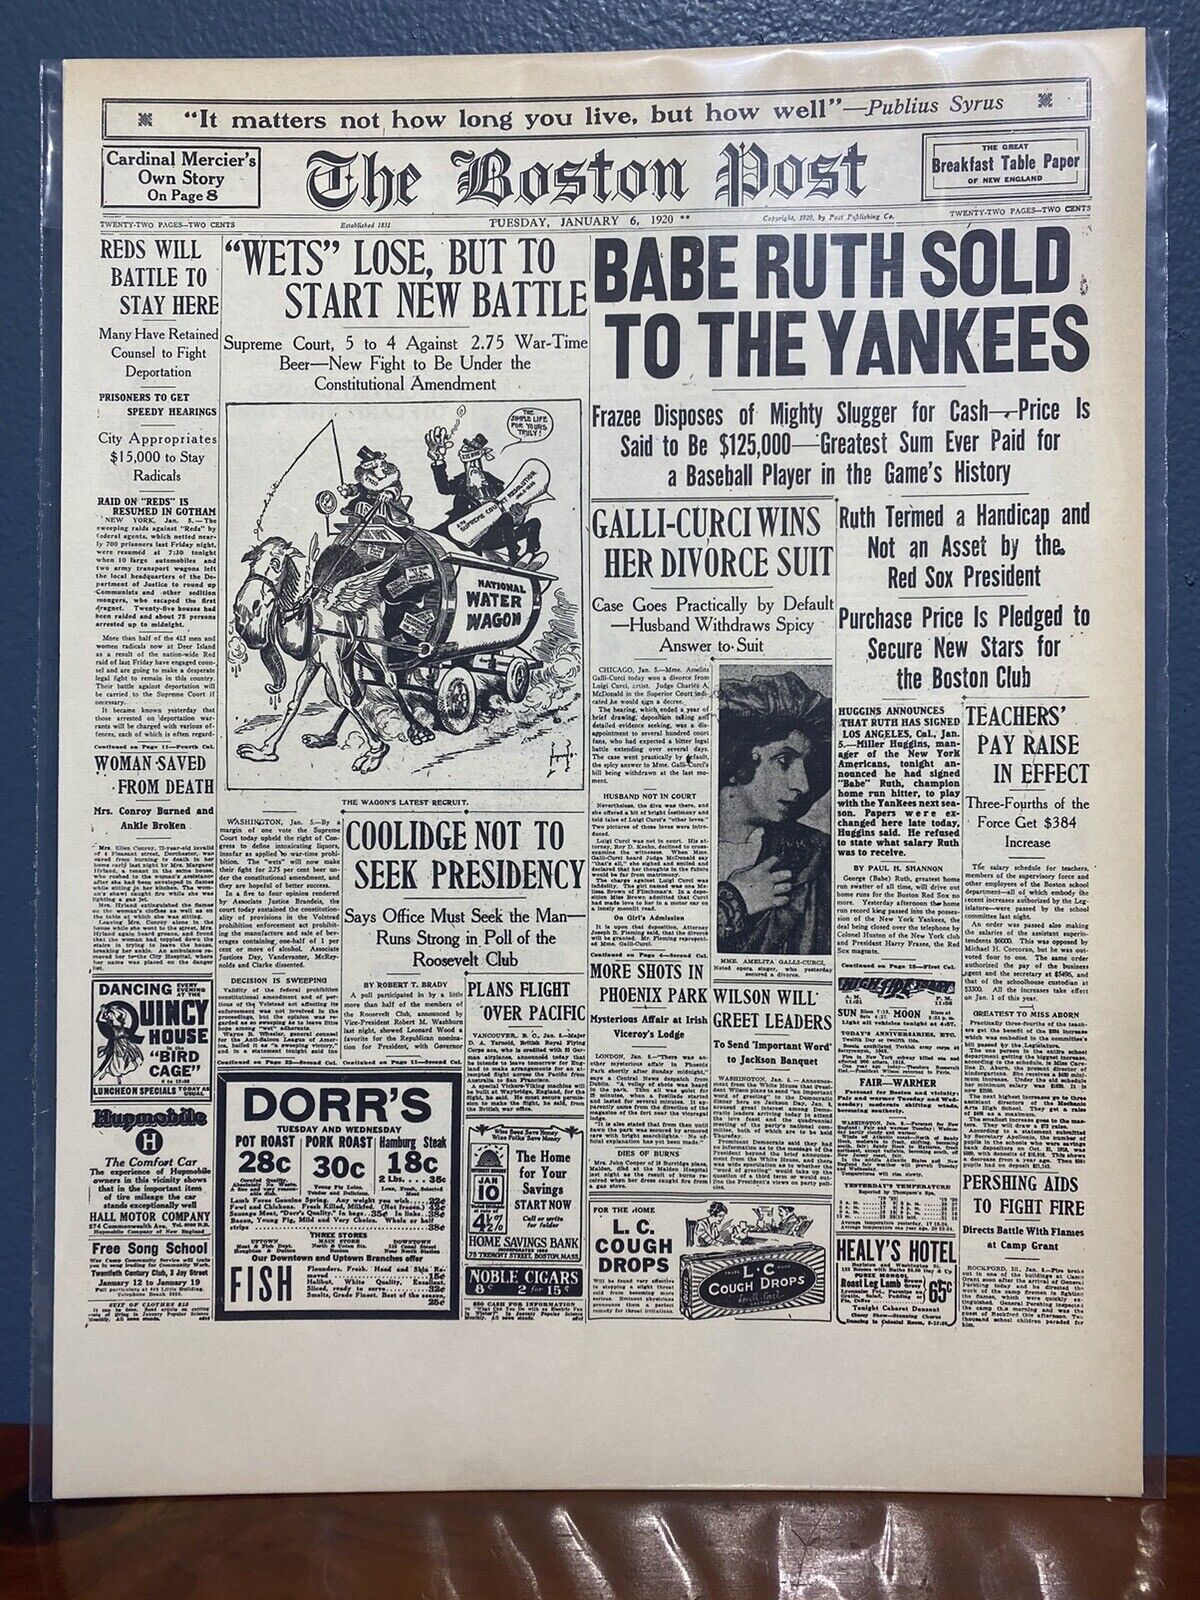 VINTAGE NEWSPAPER HEADLINE ~BABE RUTH SOLD TO NEW YORK YANKEES ~1920 BASEBALL